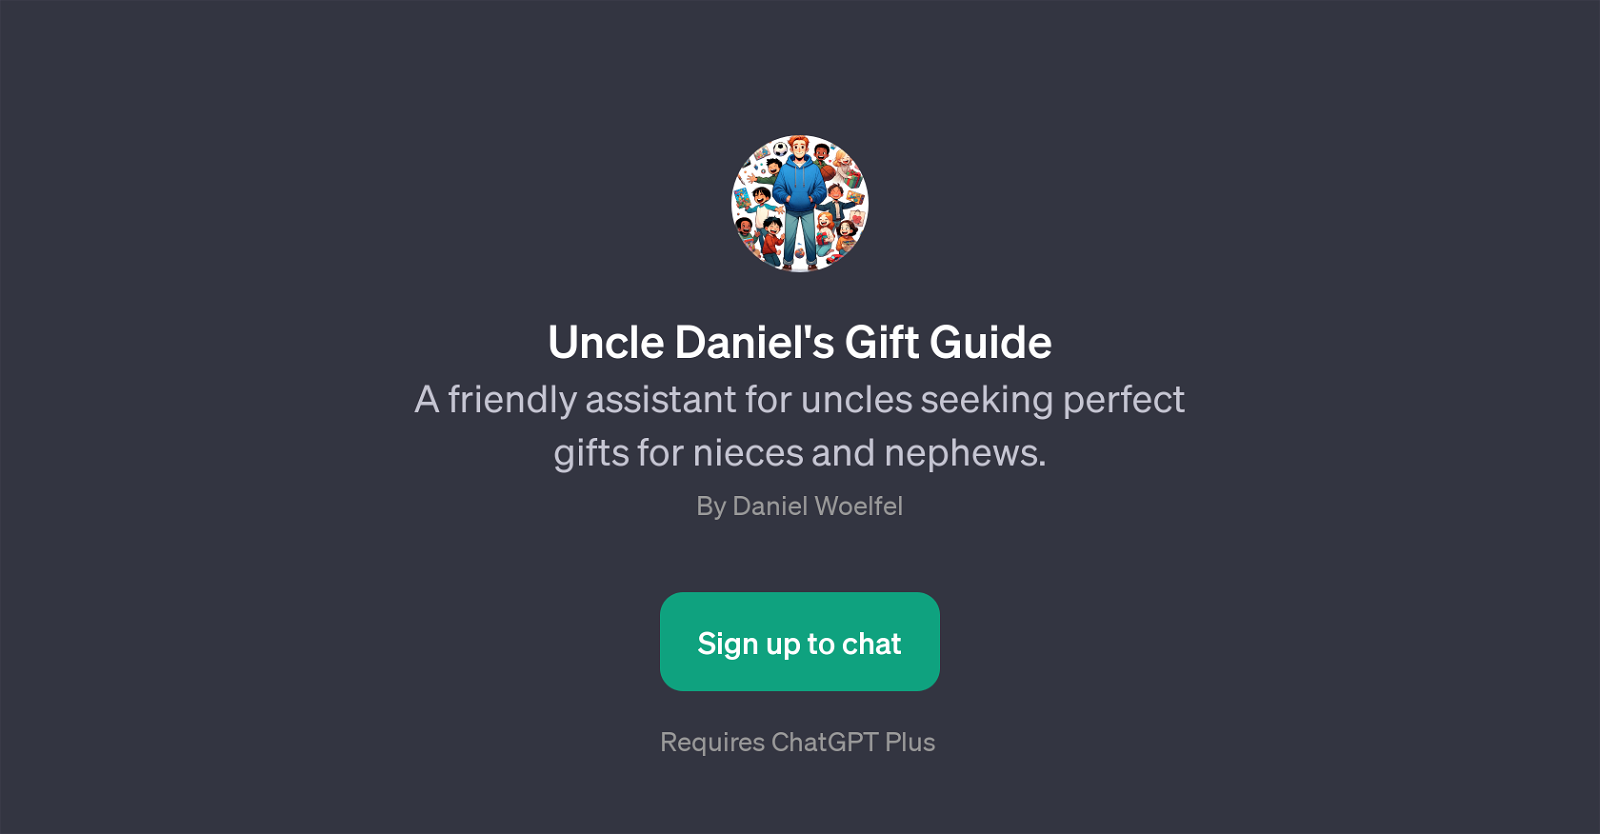 Uncle Daniel's Gift Guide website